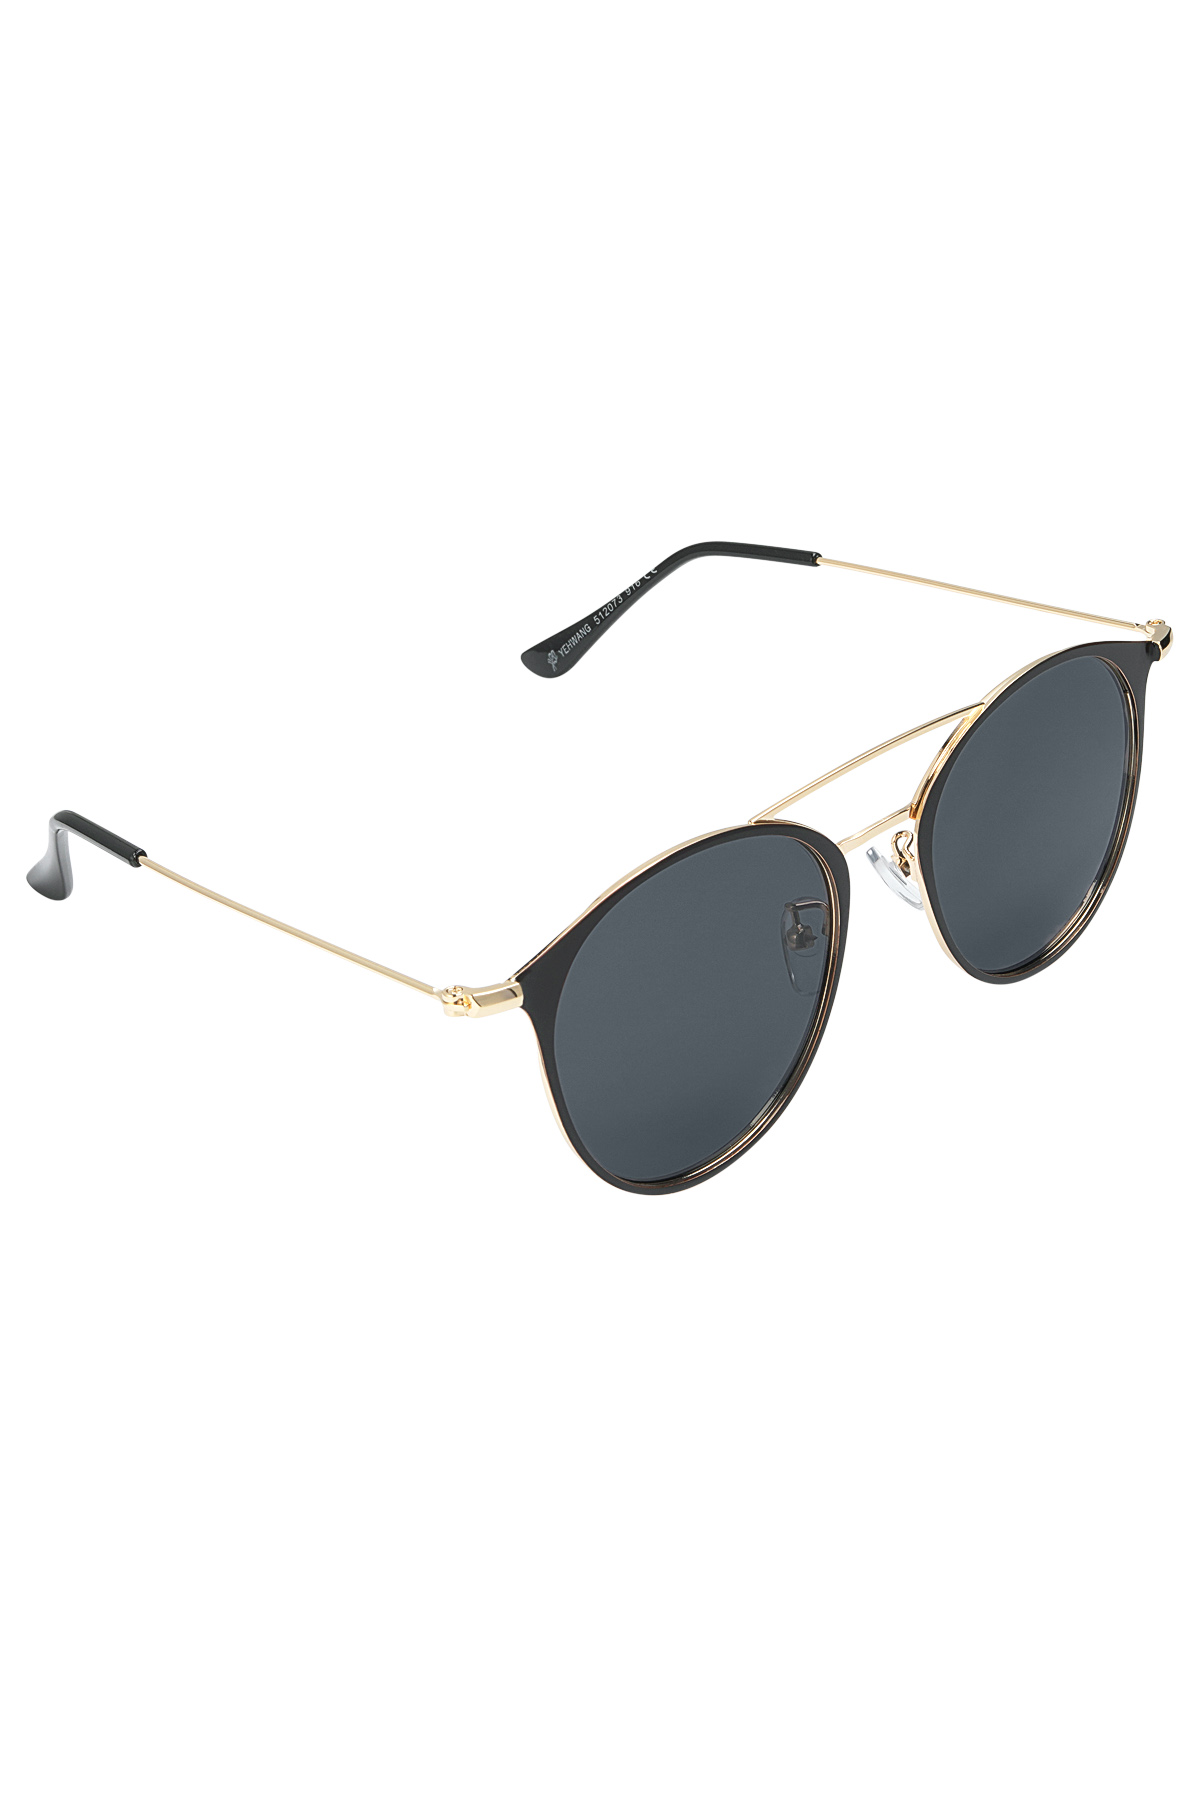 Sunglasses summer vibe - black/gold